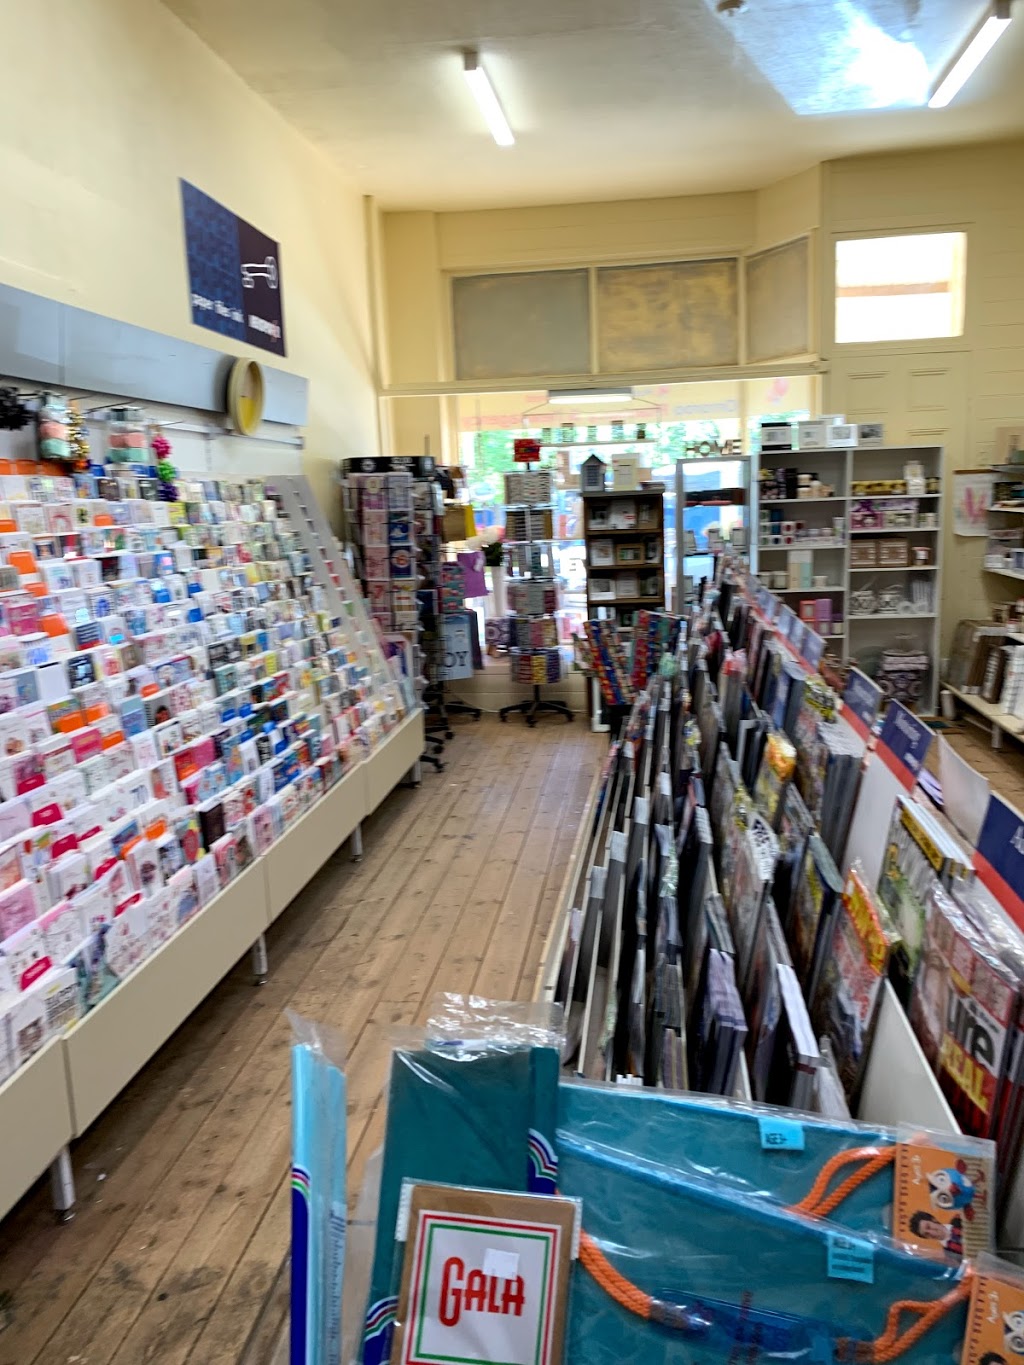 Orroroo Pharmacy & News Agency | book store | 16 Second St, Orroroo SA 5431, Australia | 0886581548 OR +61 8 8658 1548